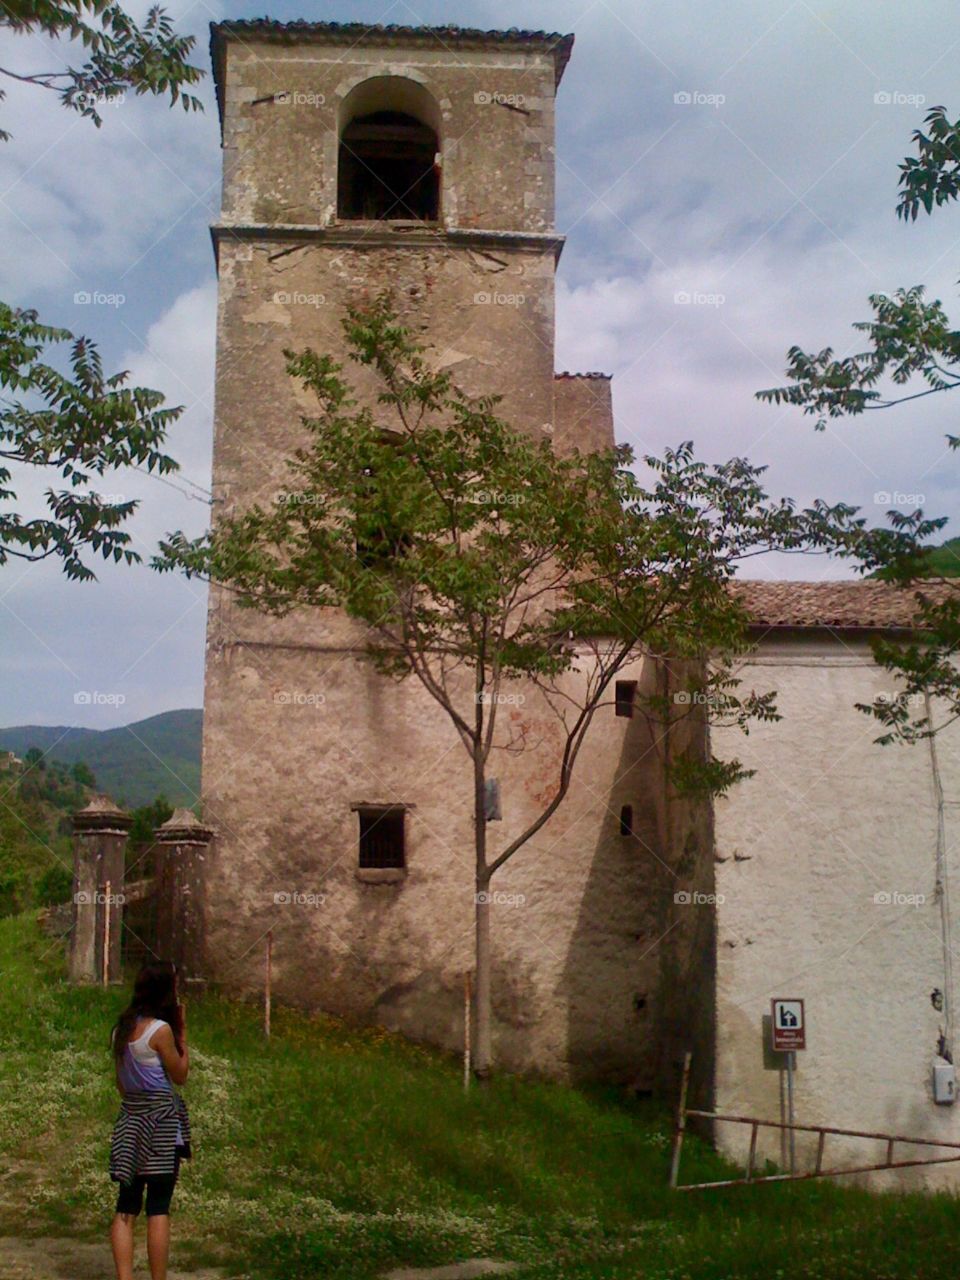 The Church in Calabria